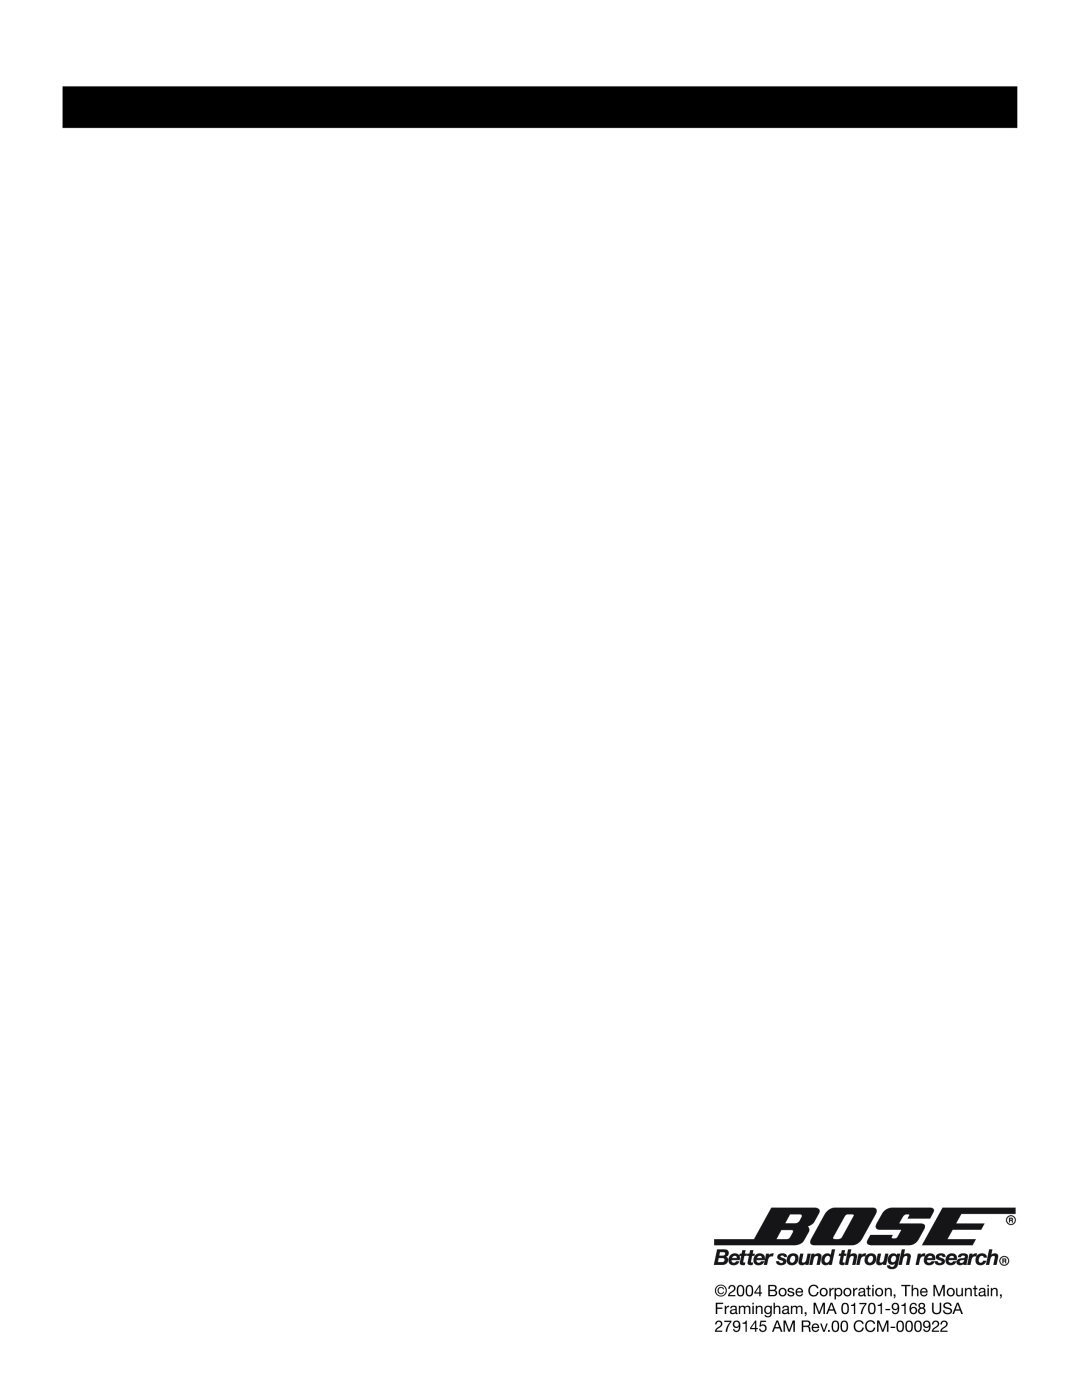 Bose E4 manual Bose Corporation, The Mountain, Framingham, MA 01701-9168USA, AM Rev.00 CCM-000922 